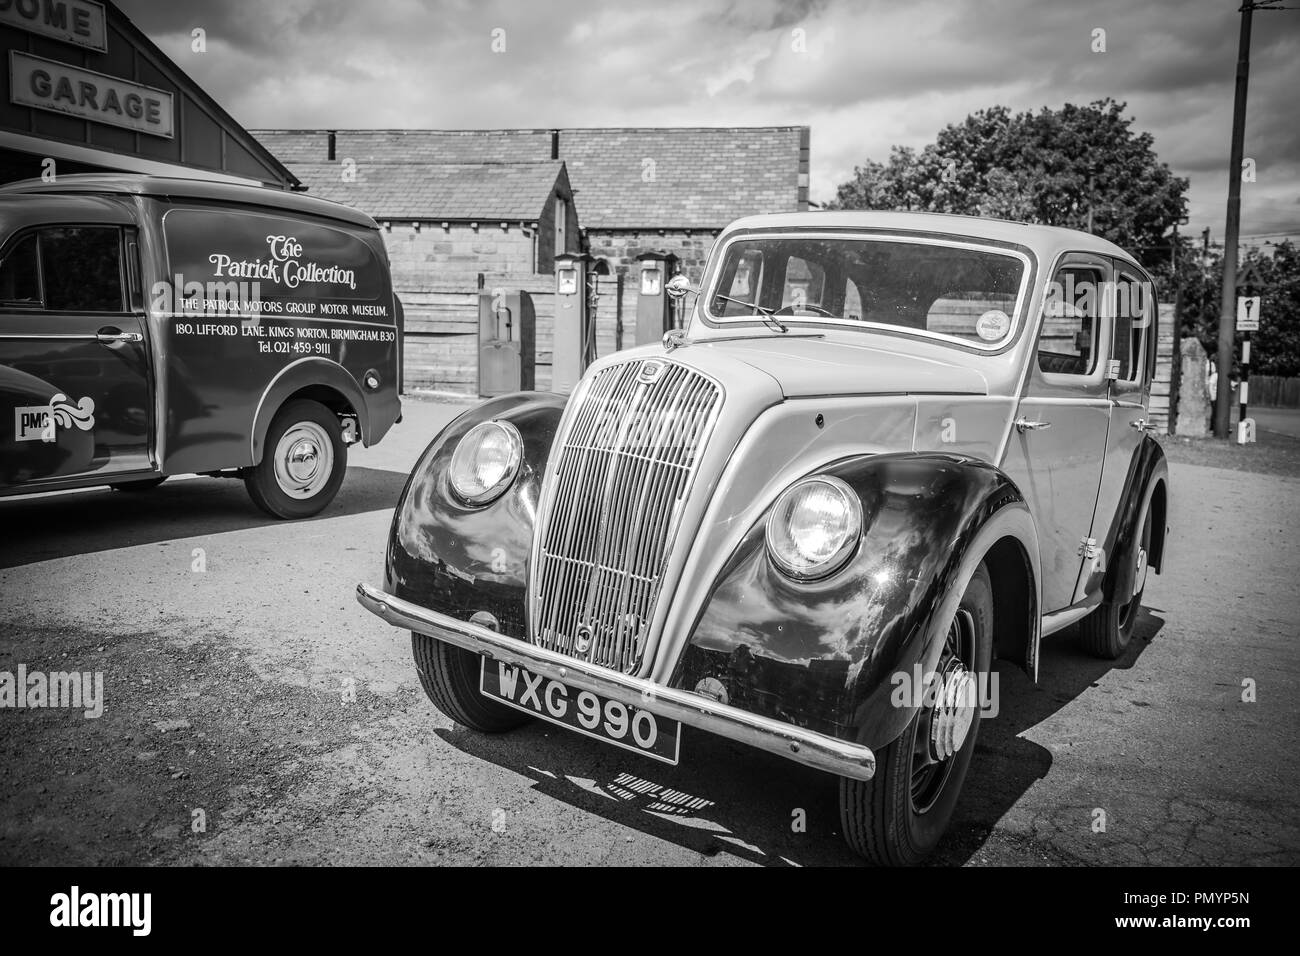 Monochrome view of vintage vehicles parked outside vintage UK garage. Vintage petrol pumps in background. Stock Photo